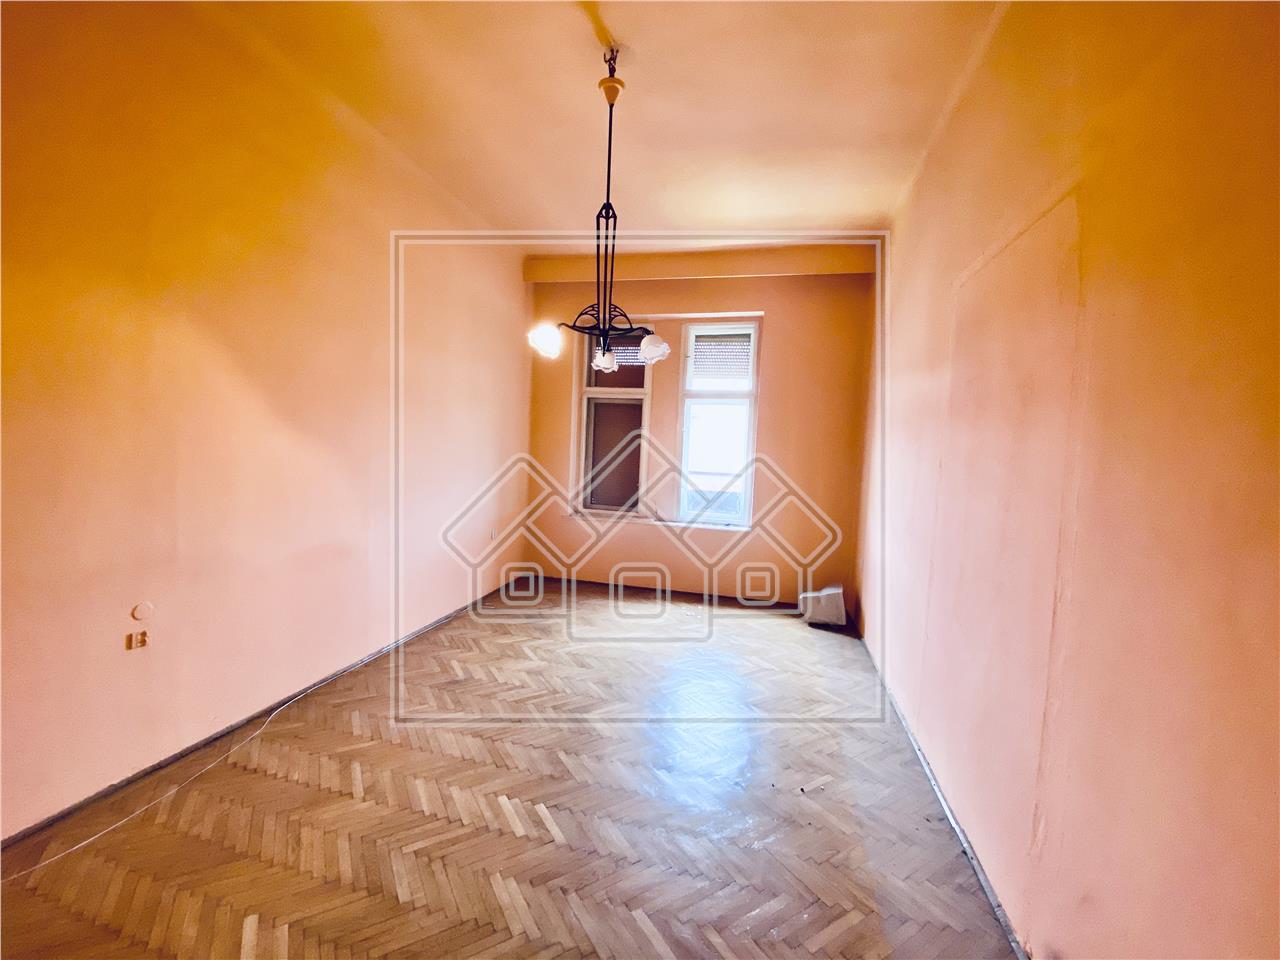 Wohnung  kaufen in Sibiu - ULTRACENTRALA Bereich